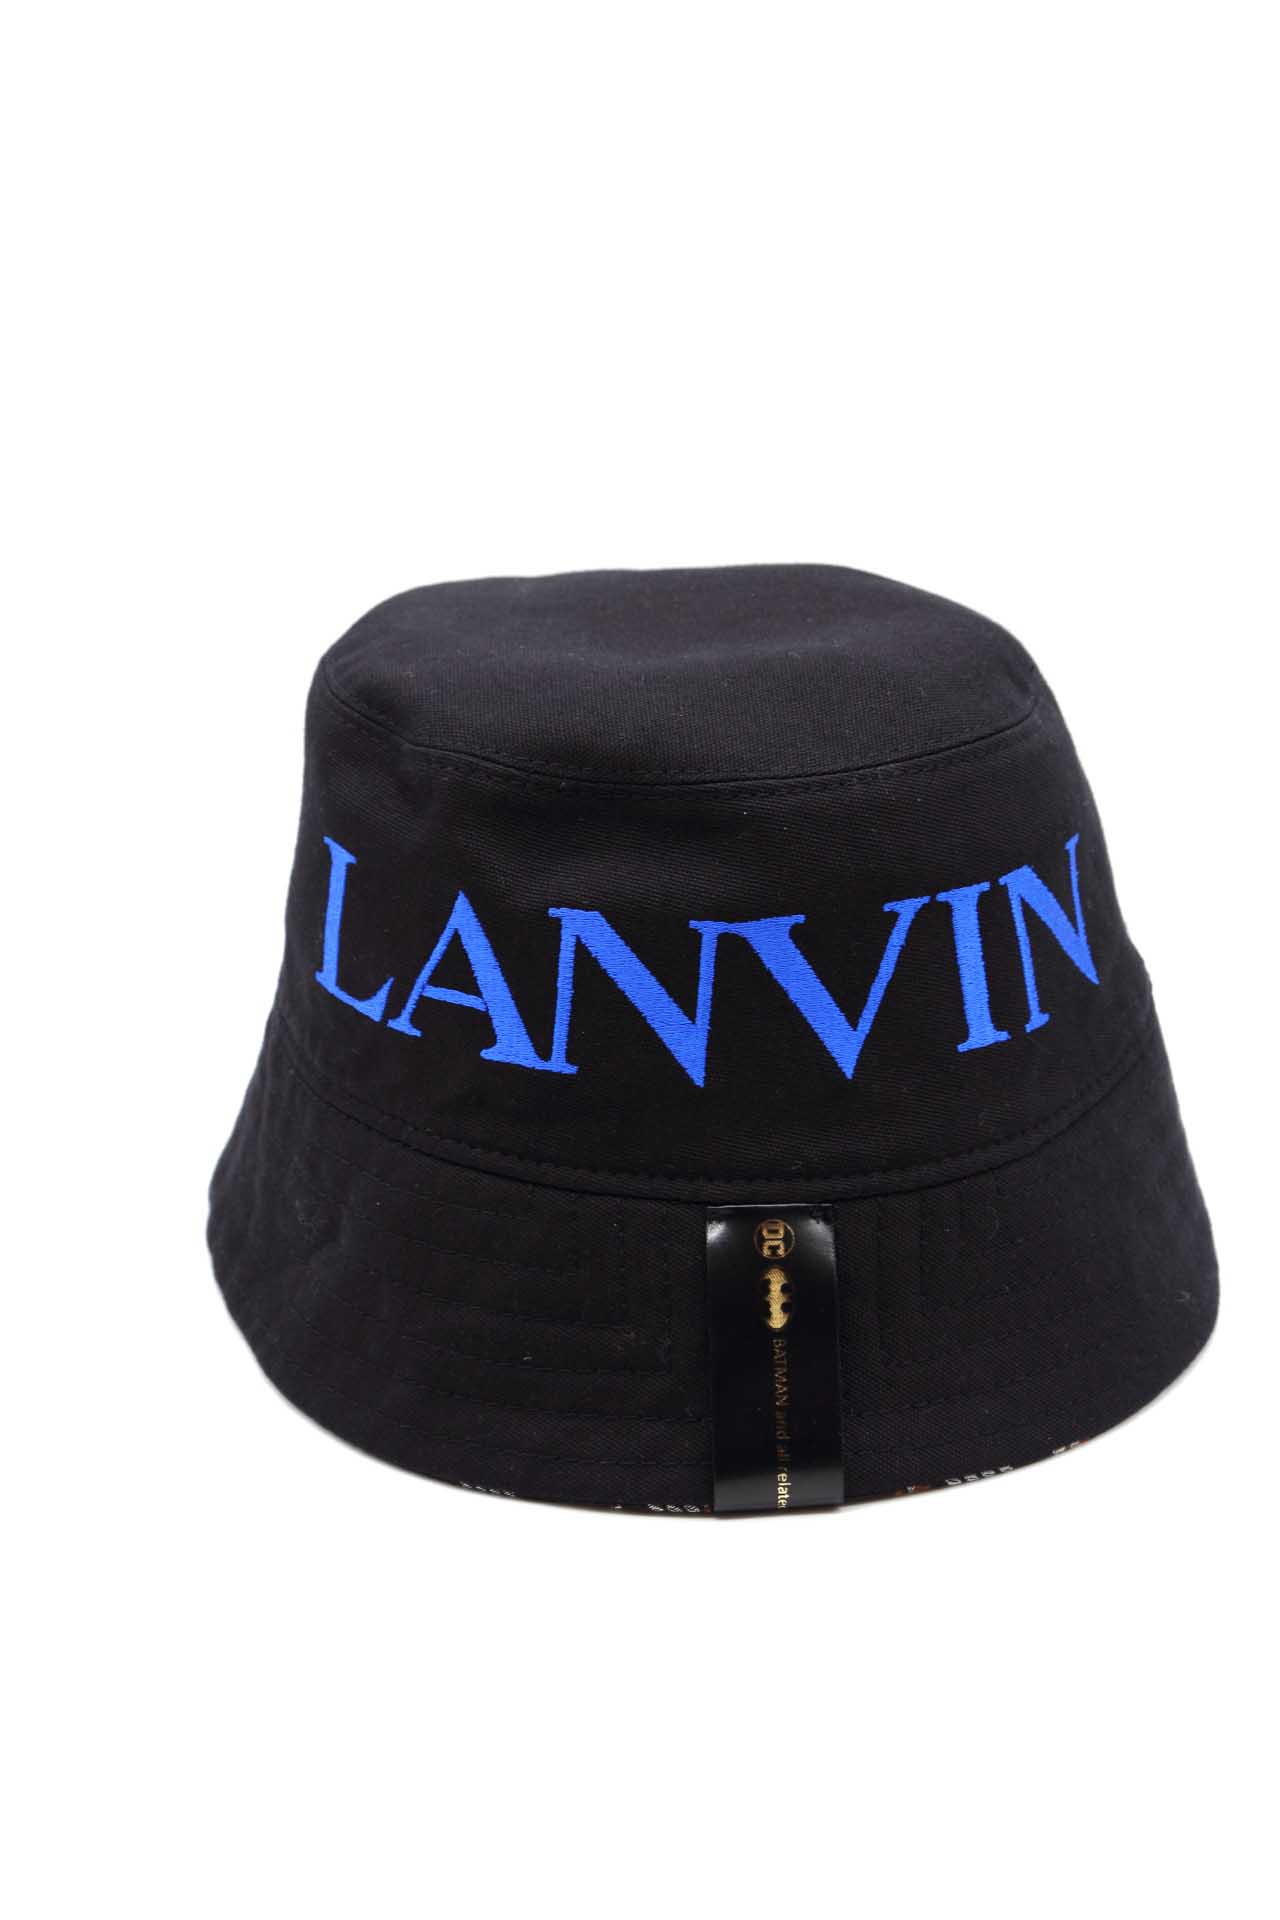 Lanvin, Cappellino